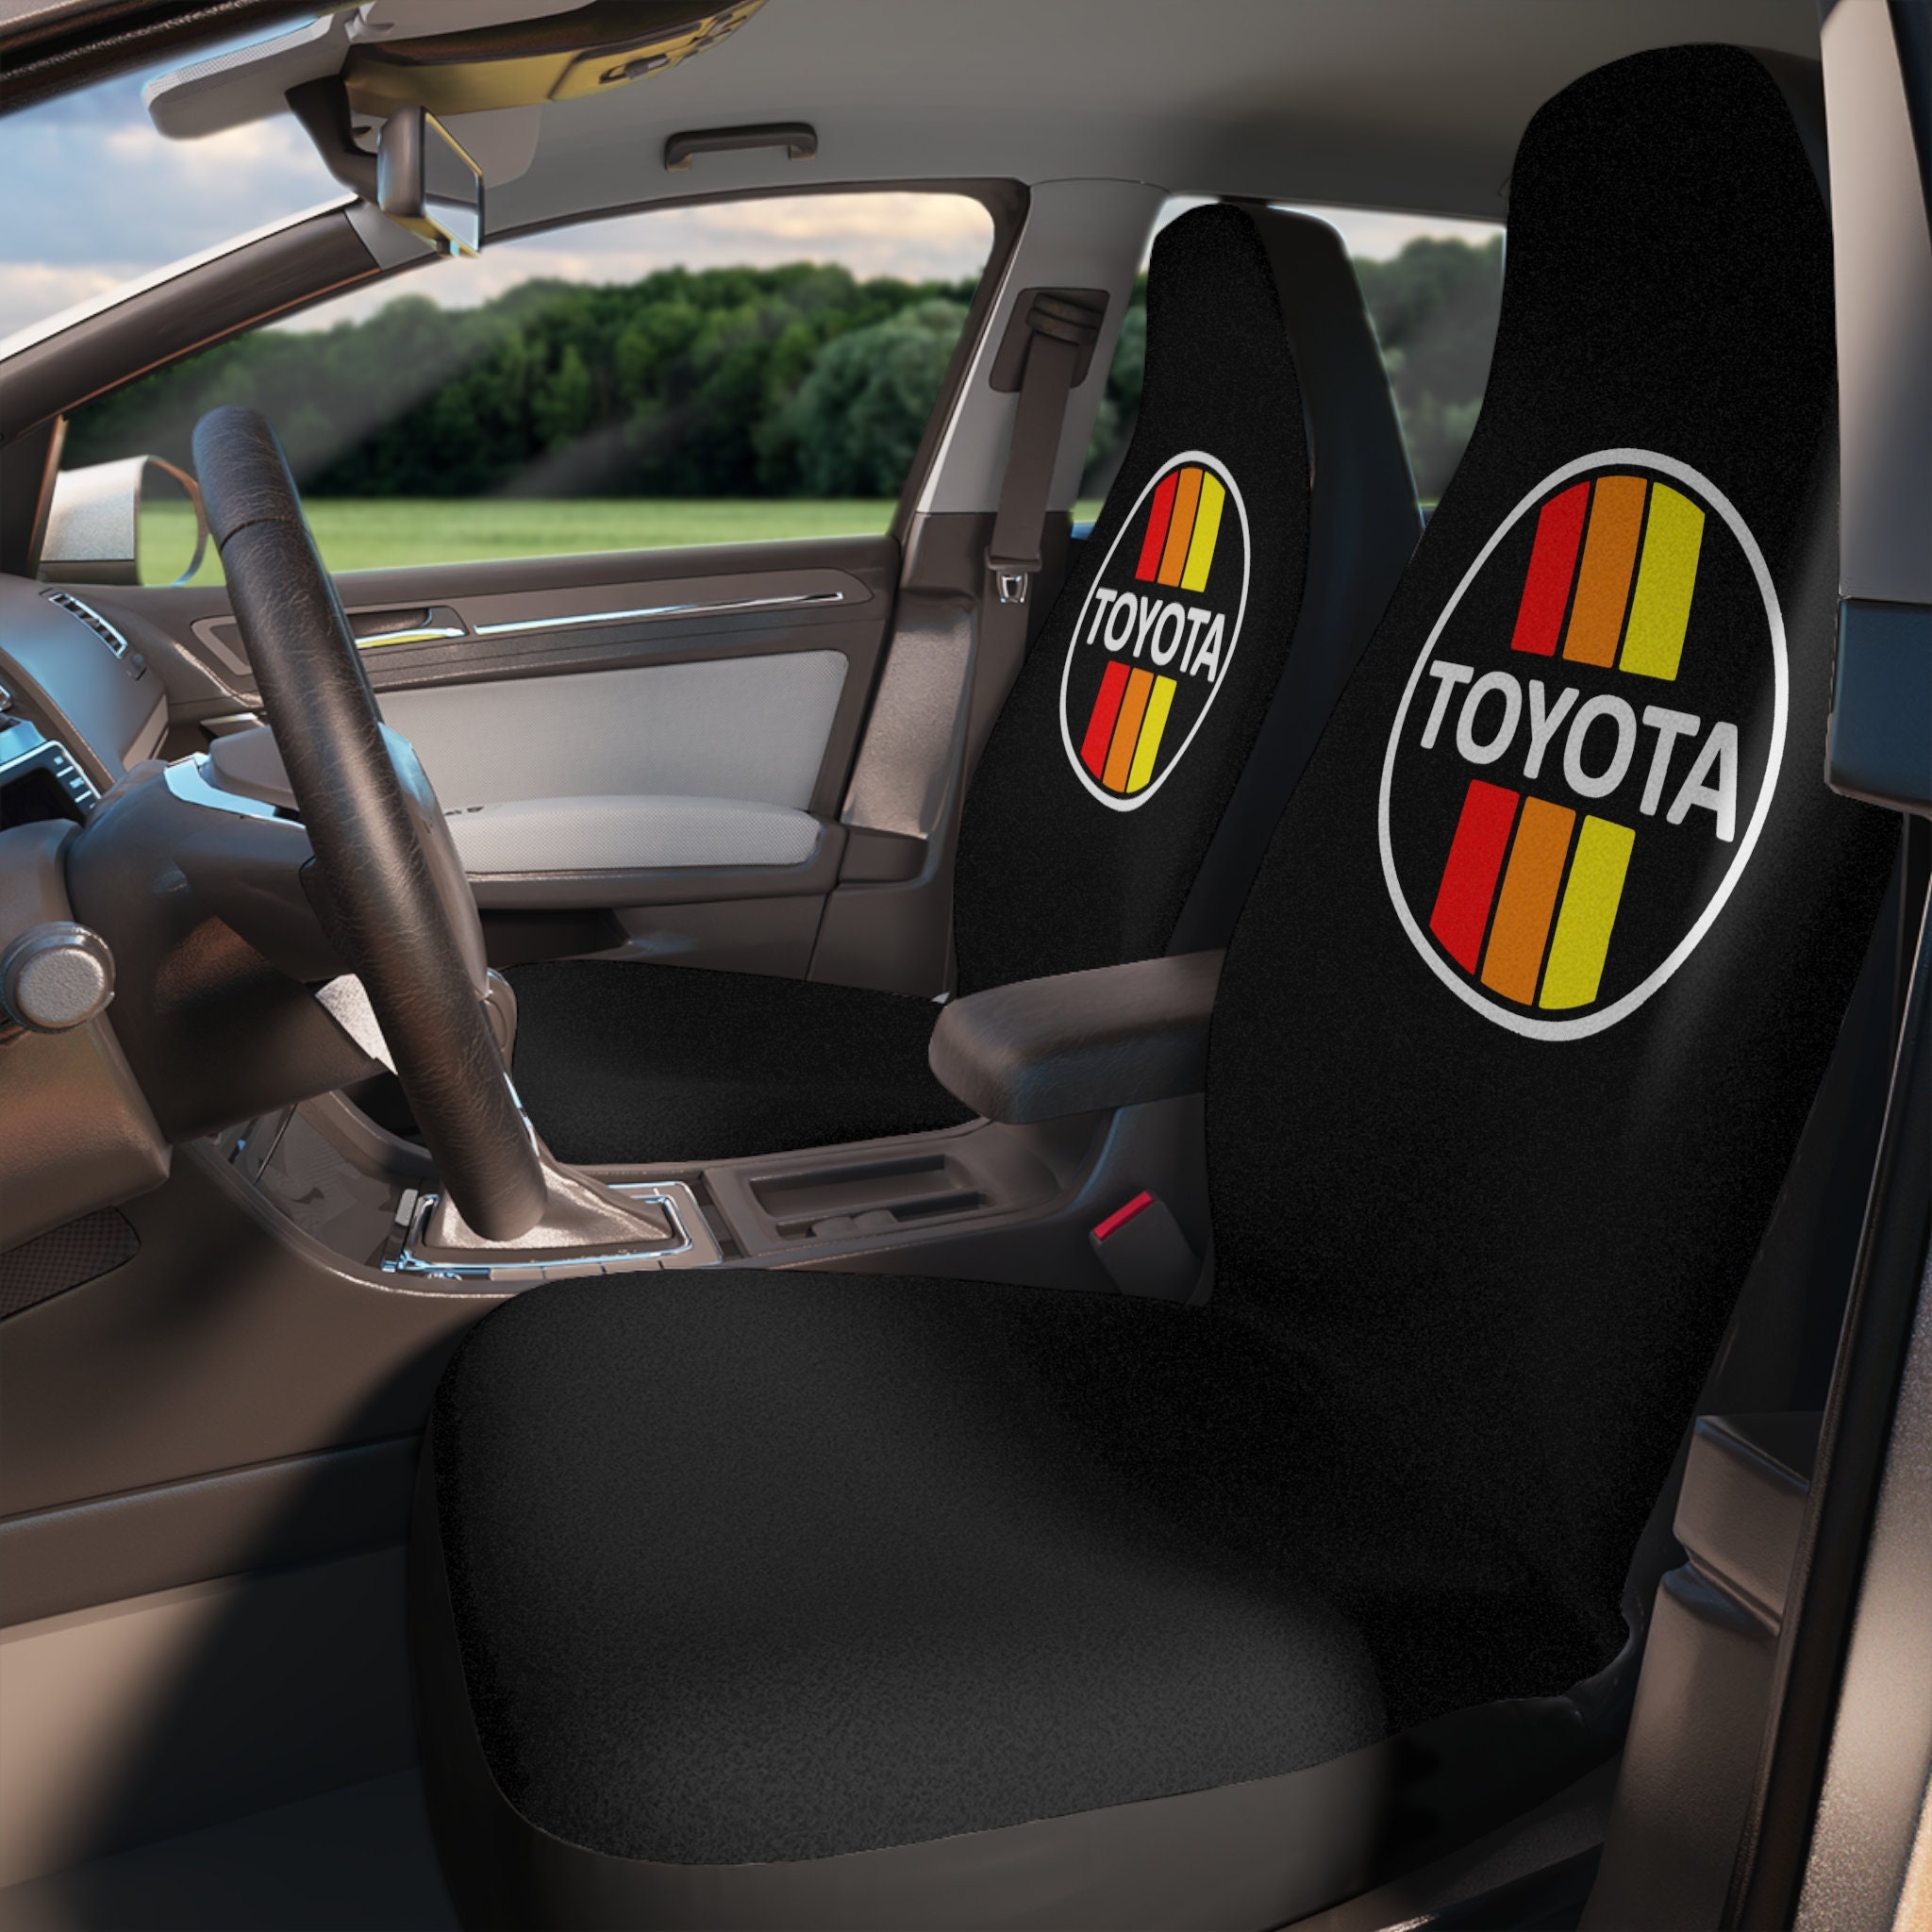 Buy Toyota Seat Online In India -  India